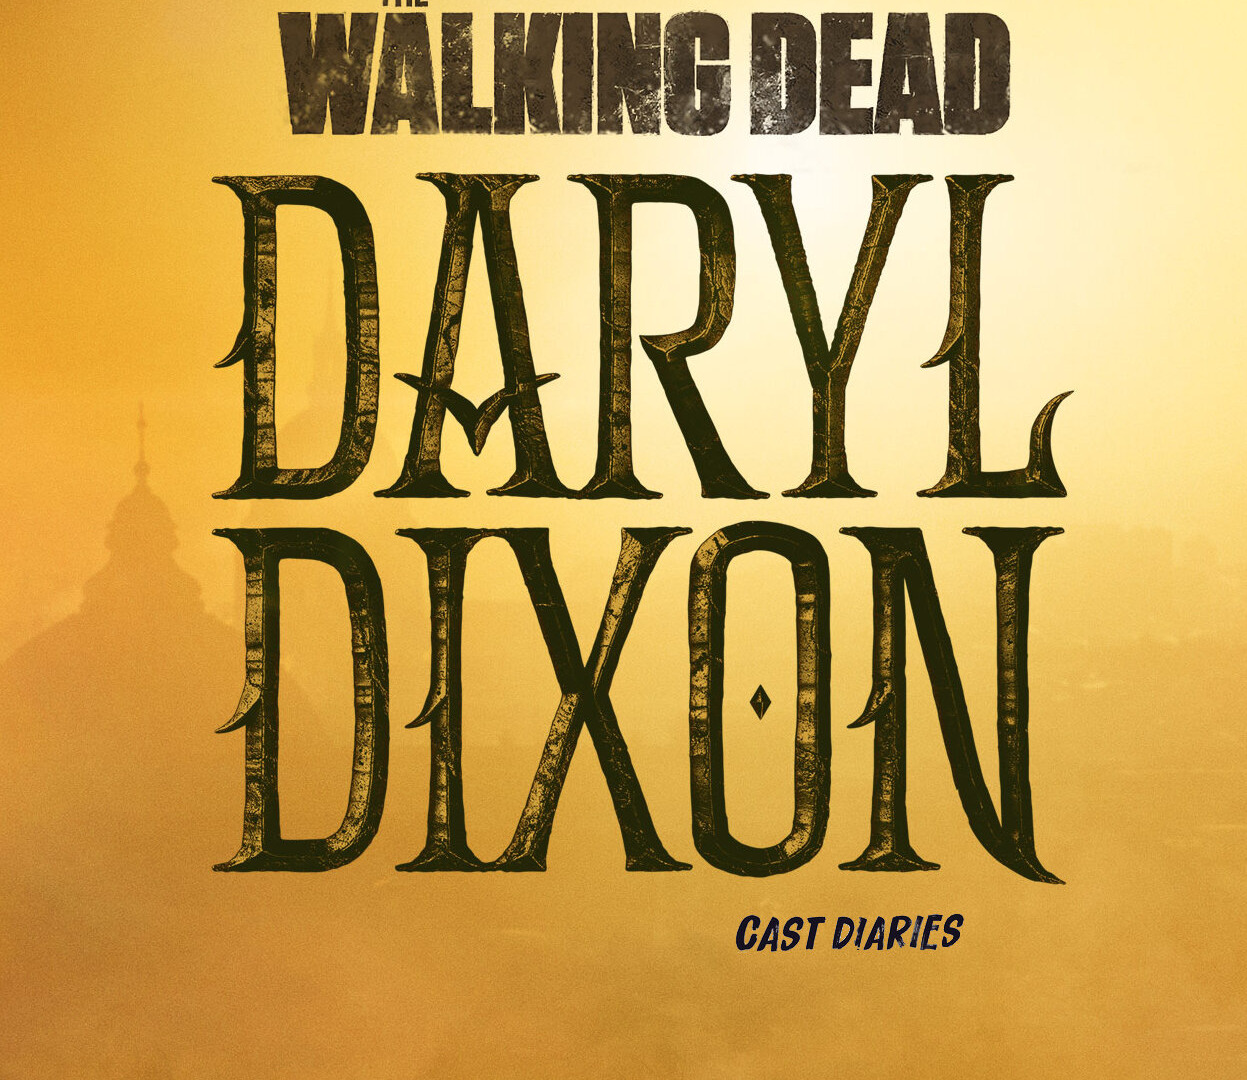 Show TWD Daryl Dixon: Cast Diaries